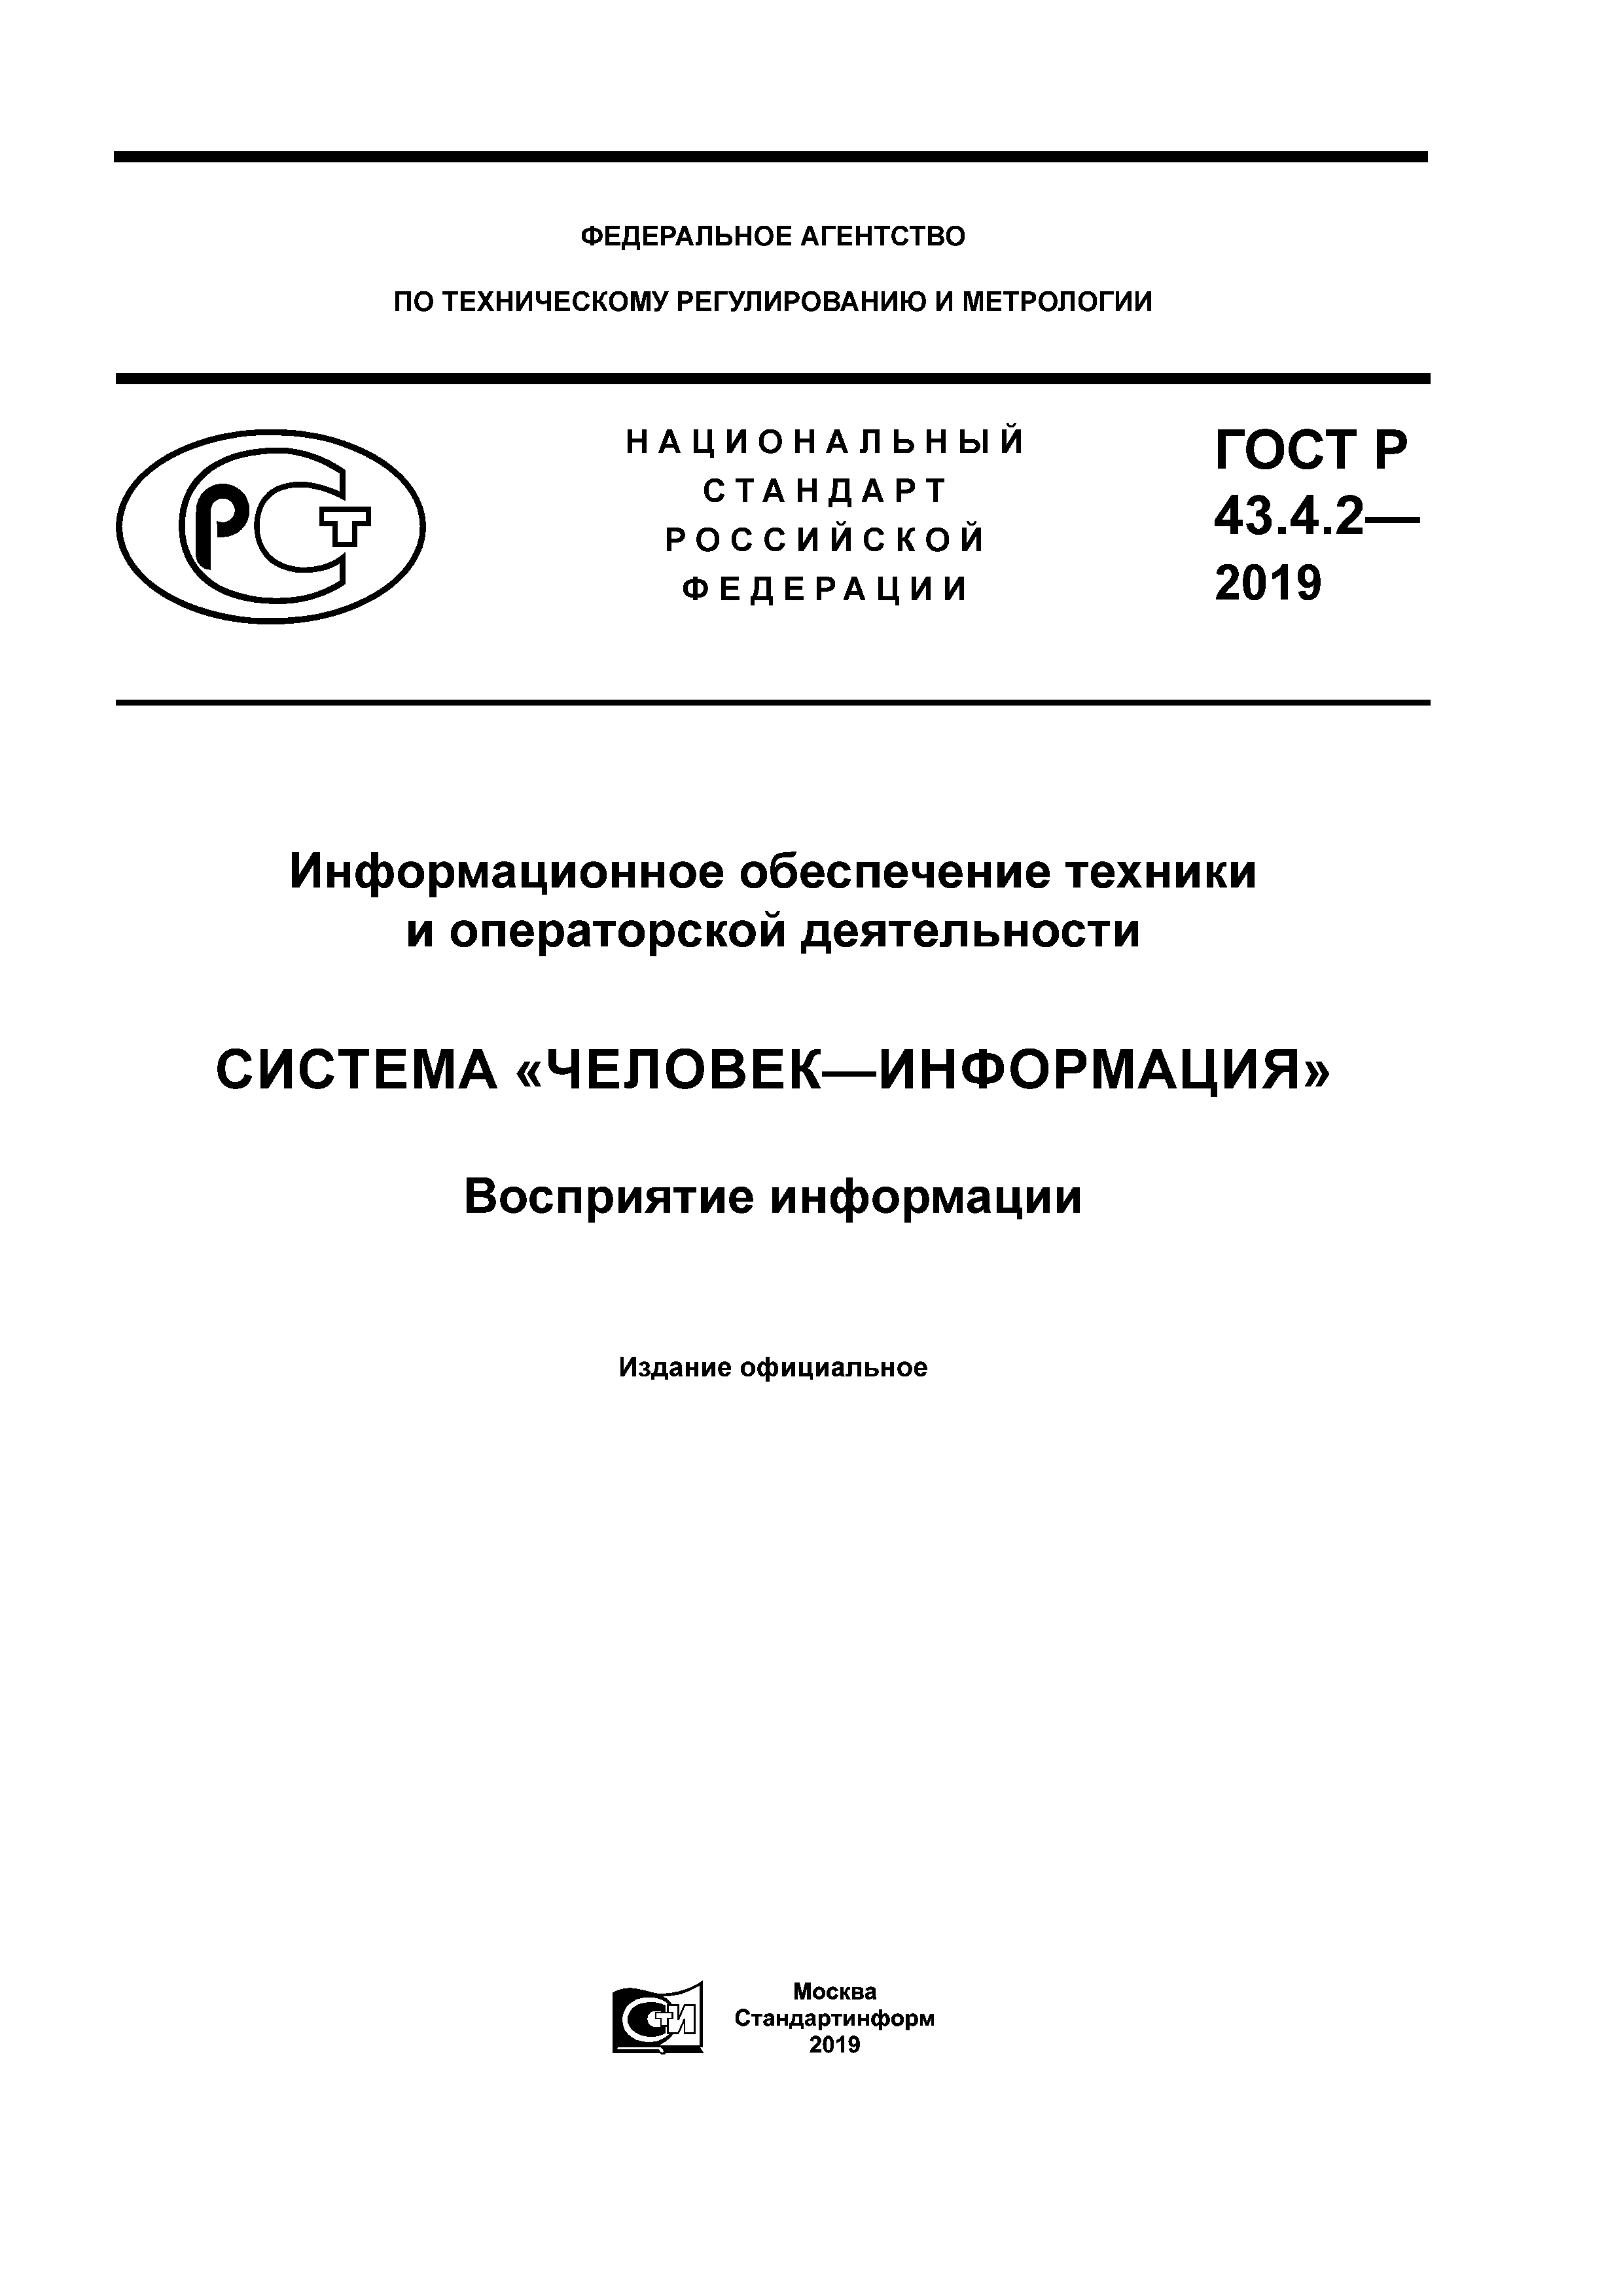 ГОСТ Р 43.4.2-2019